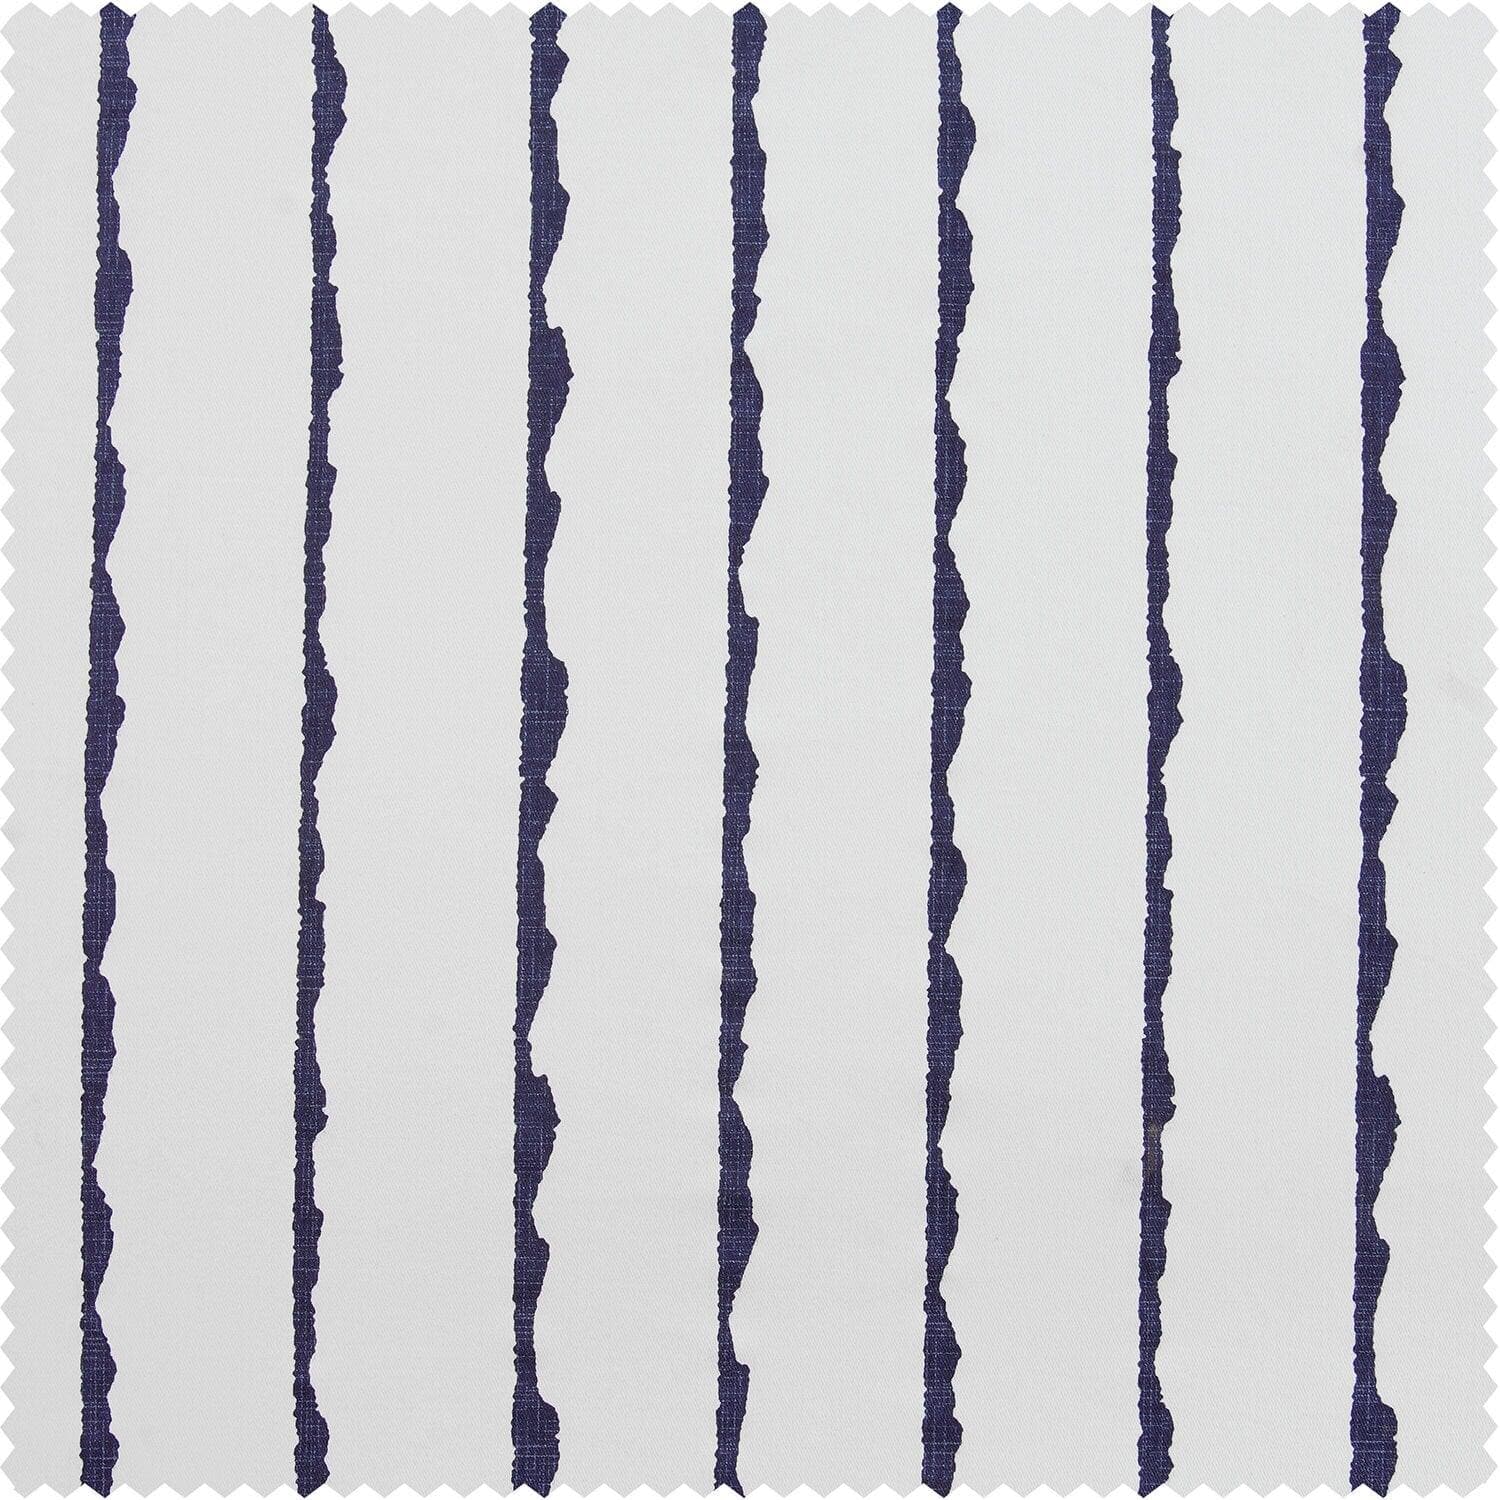 Sharkskin Blue Striped French Pleat Printed Cotton Room Darkening Curtain